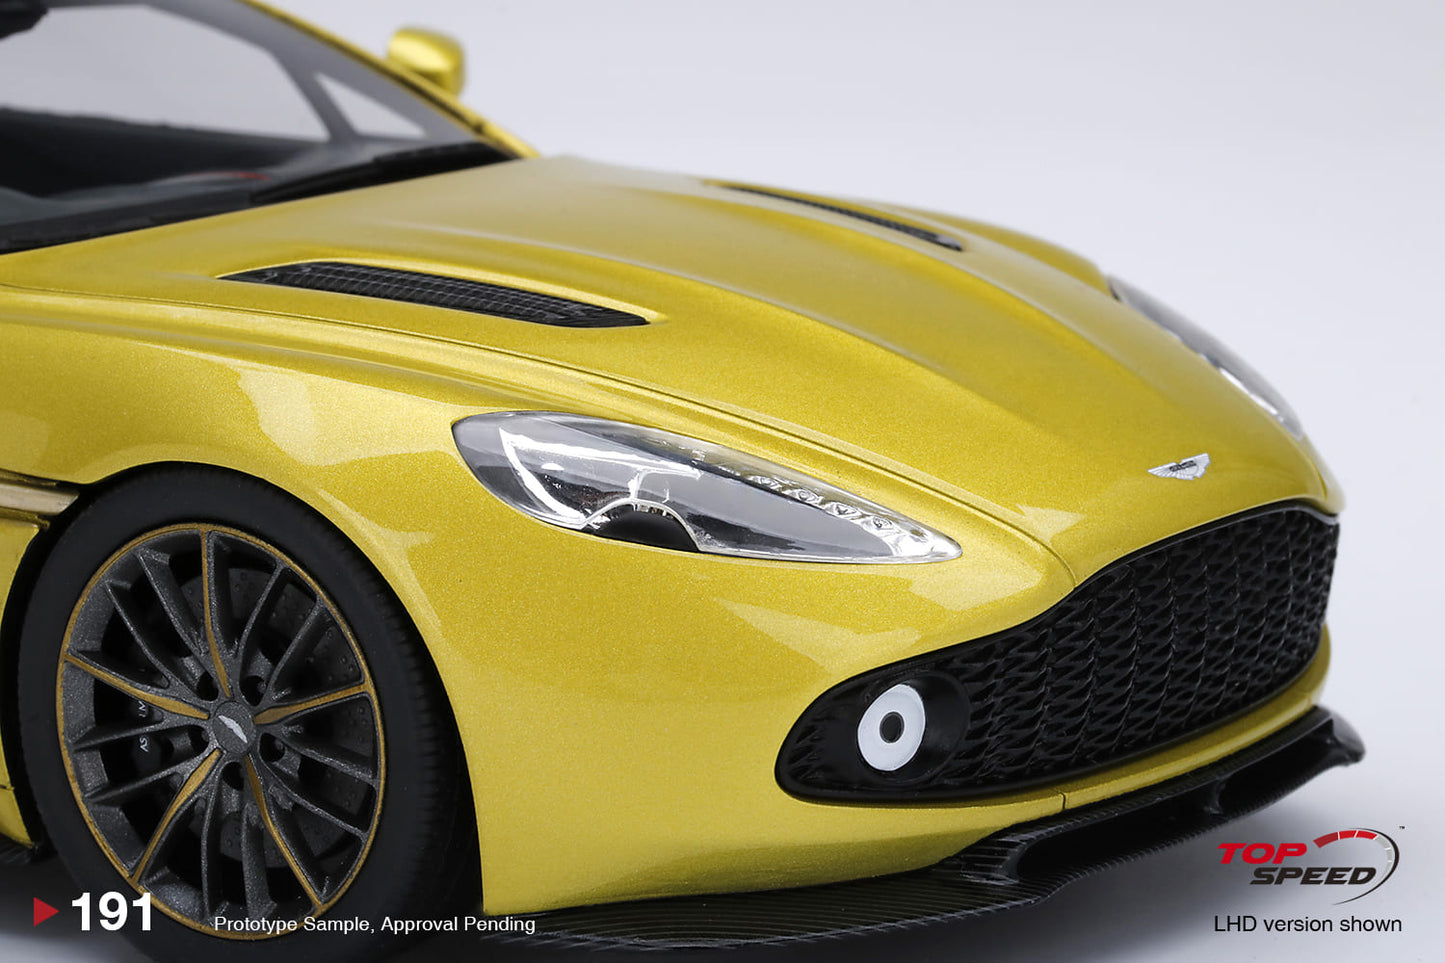 Topspeed 1:18 Aston Martin Vanquish Zagato Cosmopolitan Yellow